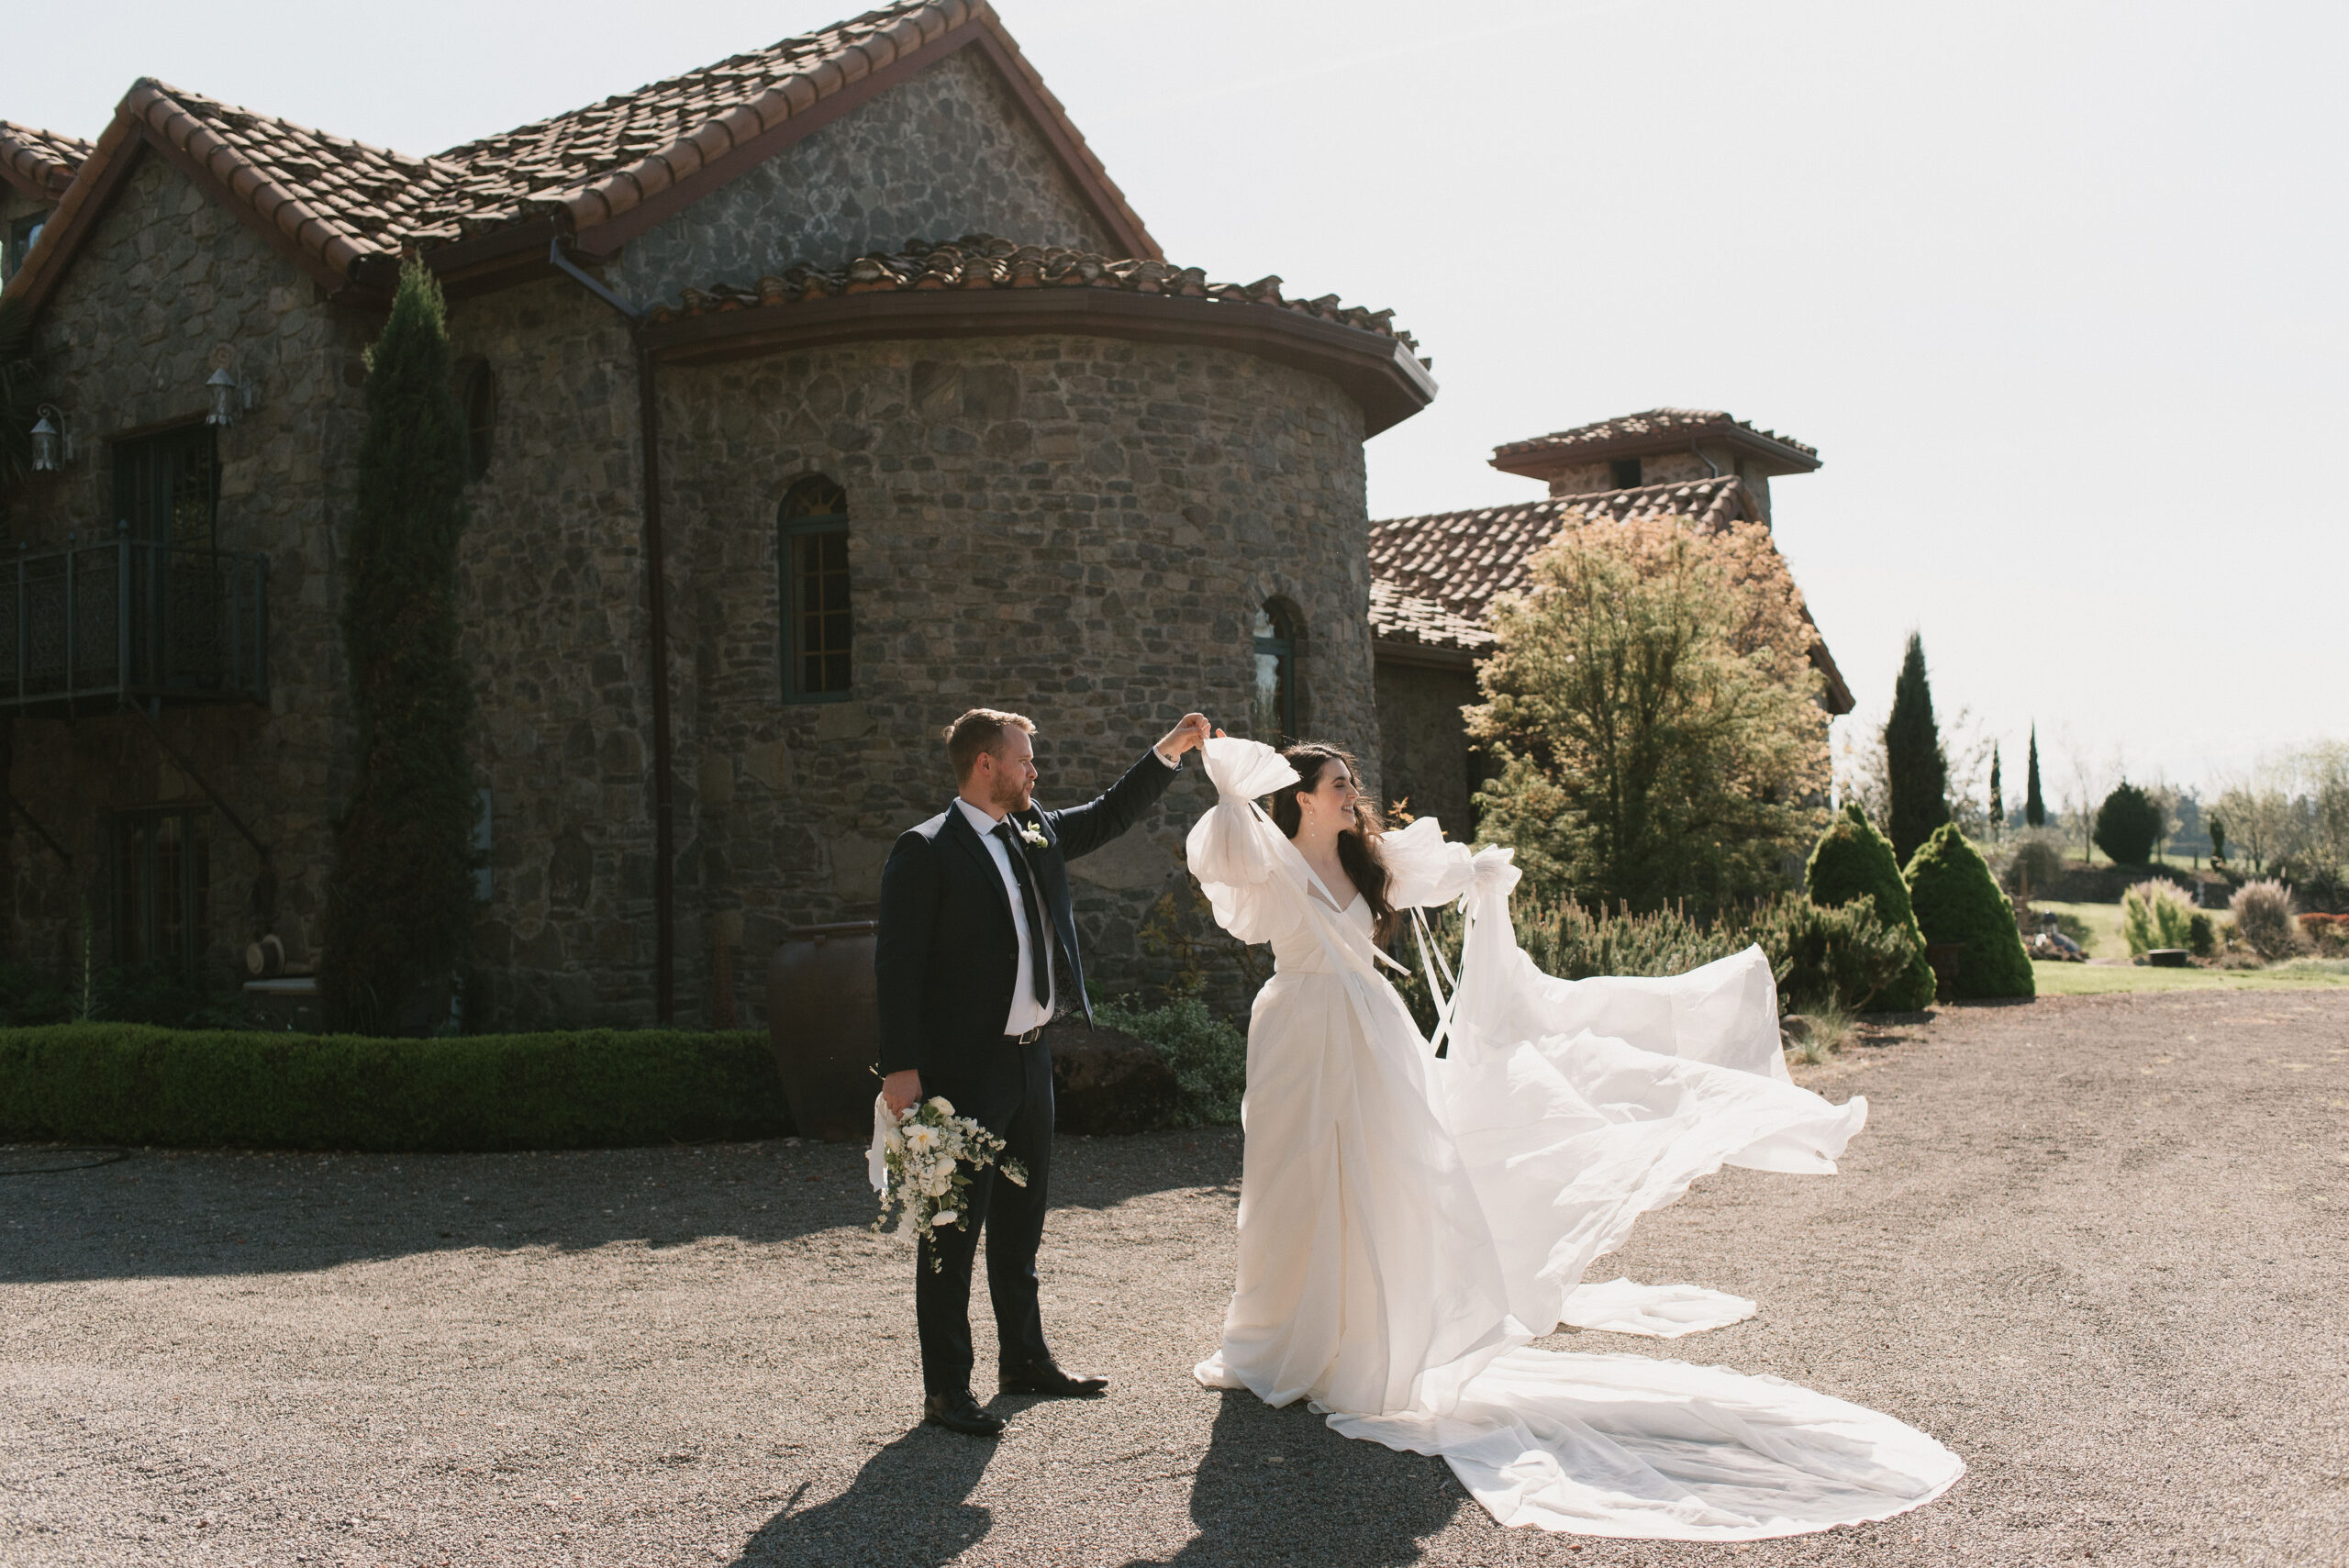 bride and groom dancing at european-inspired wedding venue 